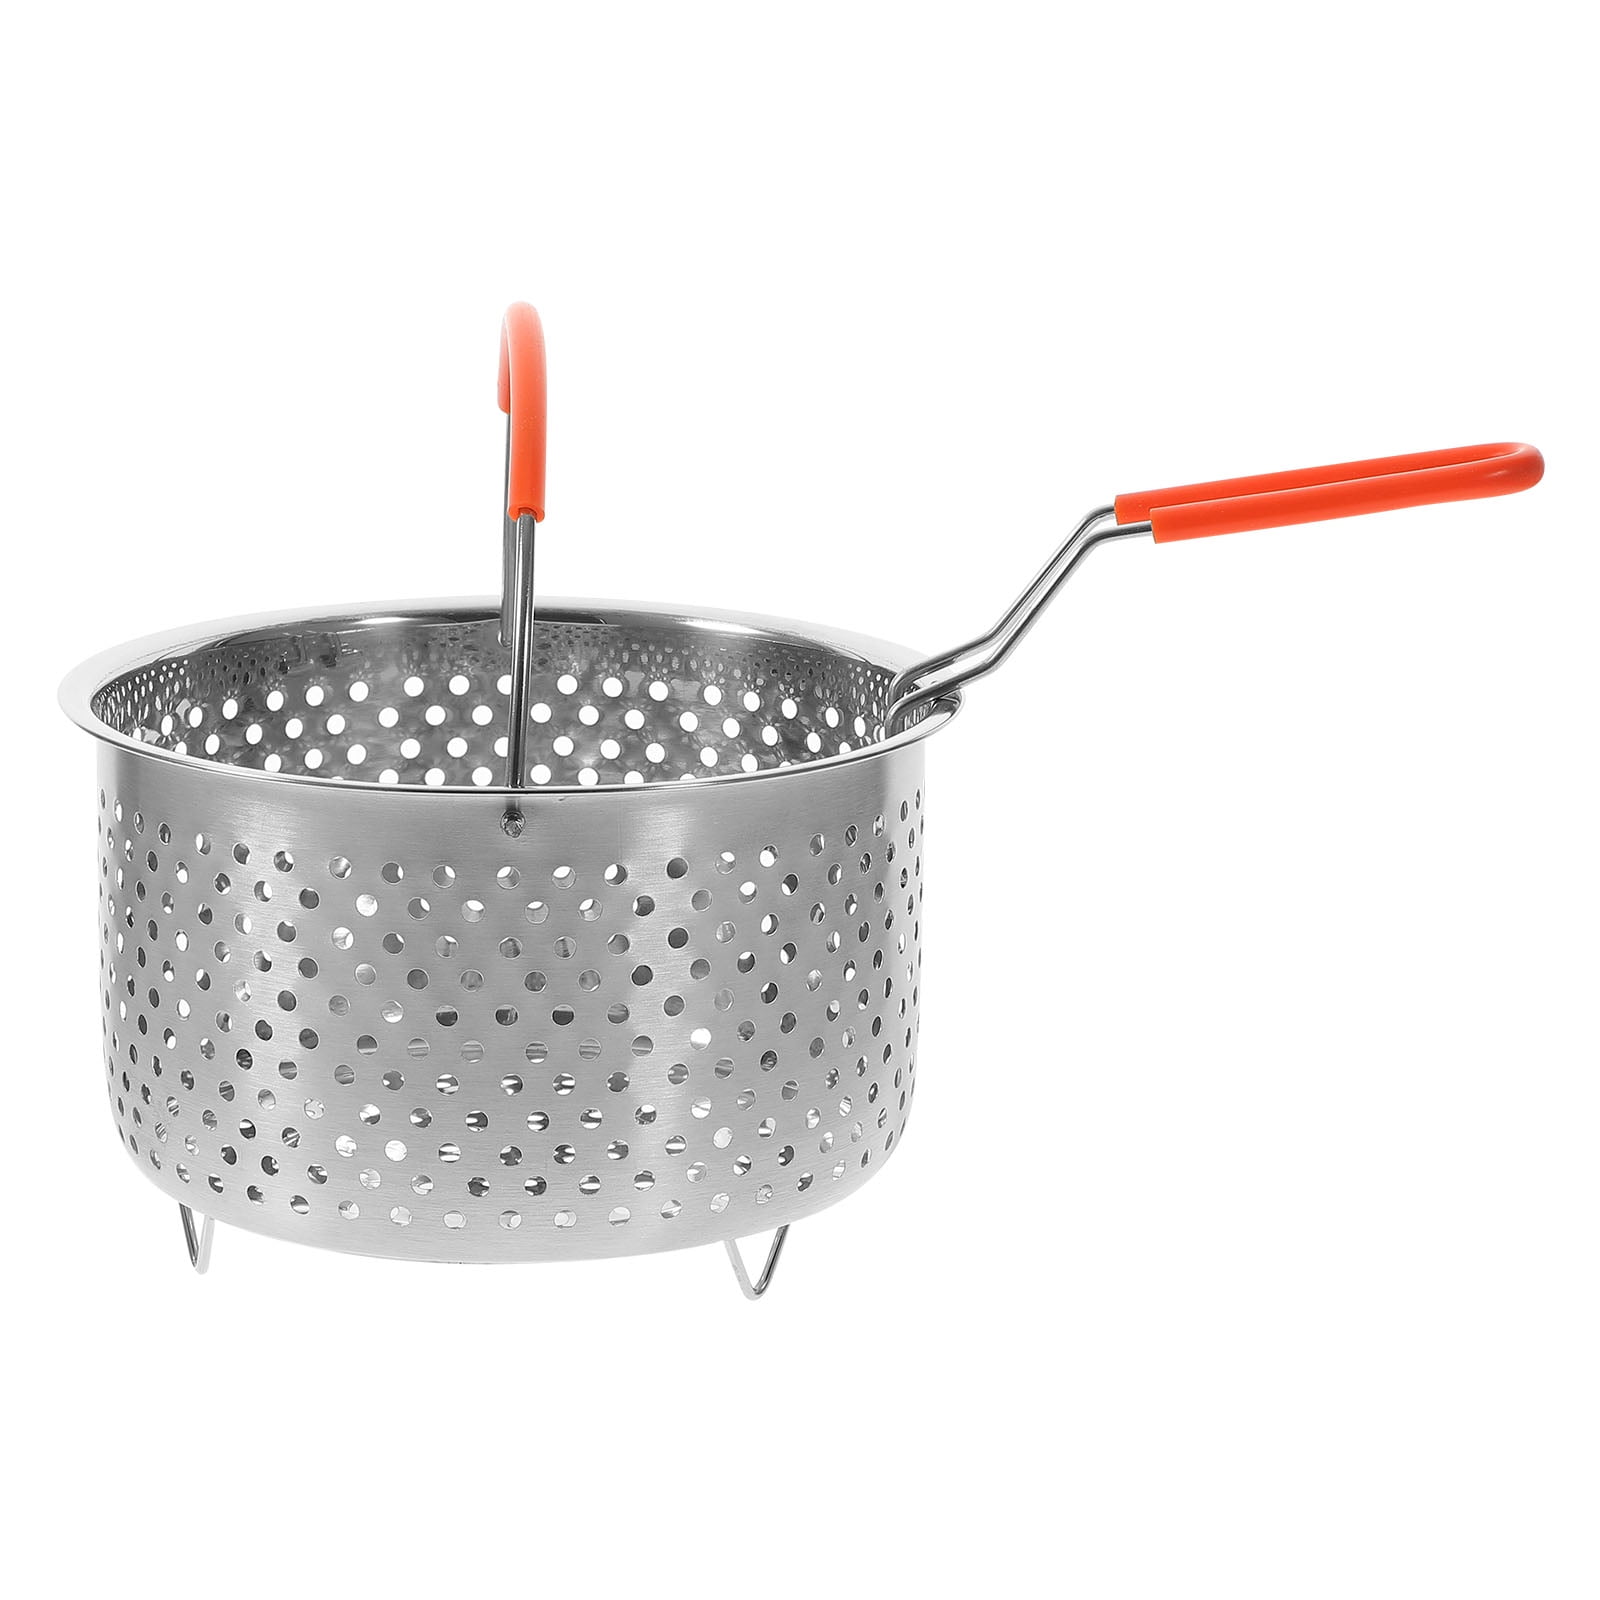 Steamer Basket for Cooking, Deep Fryer Basket with Handle Deep Fryer  Strainer 2 in 1 (Dia:20cm)